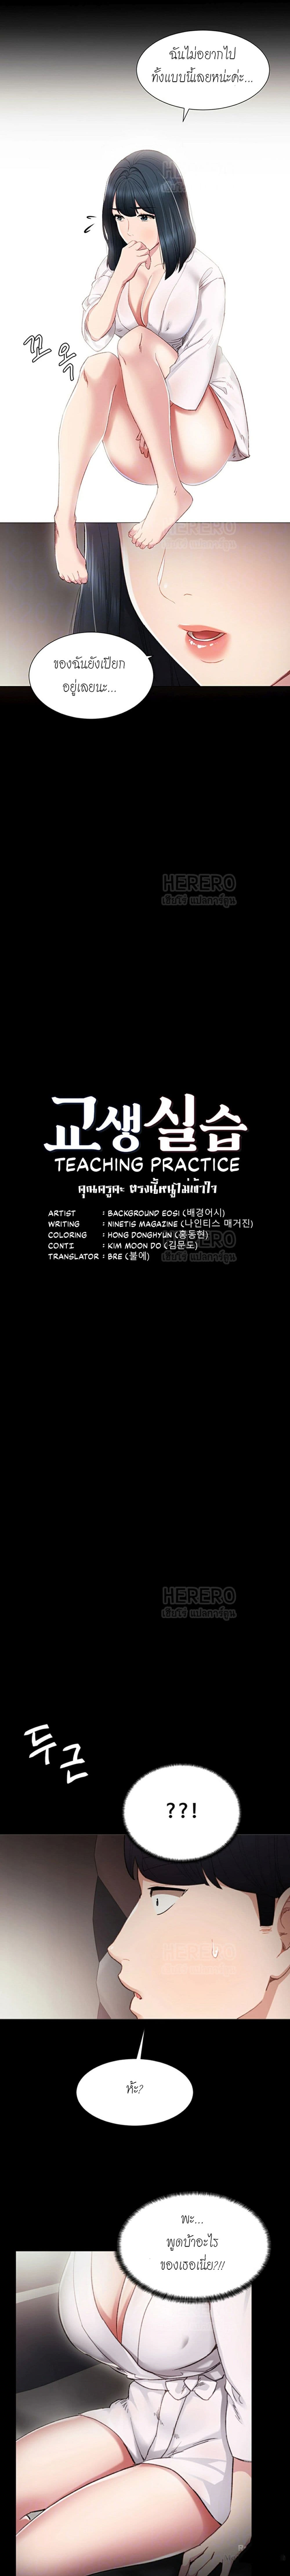 Teaching Practice 7-7